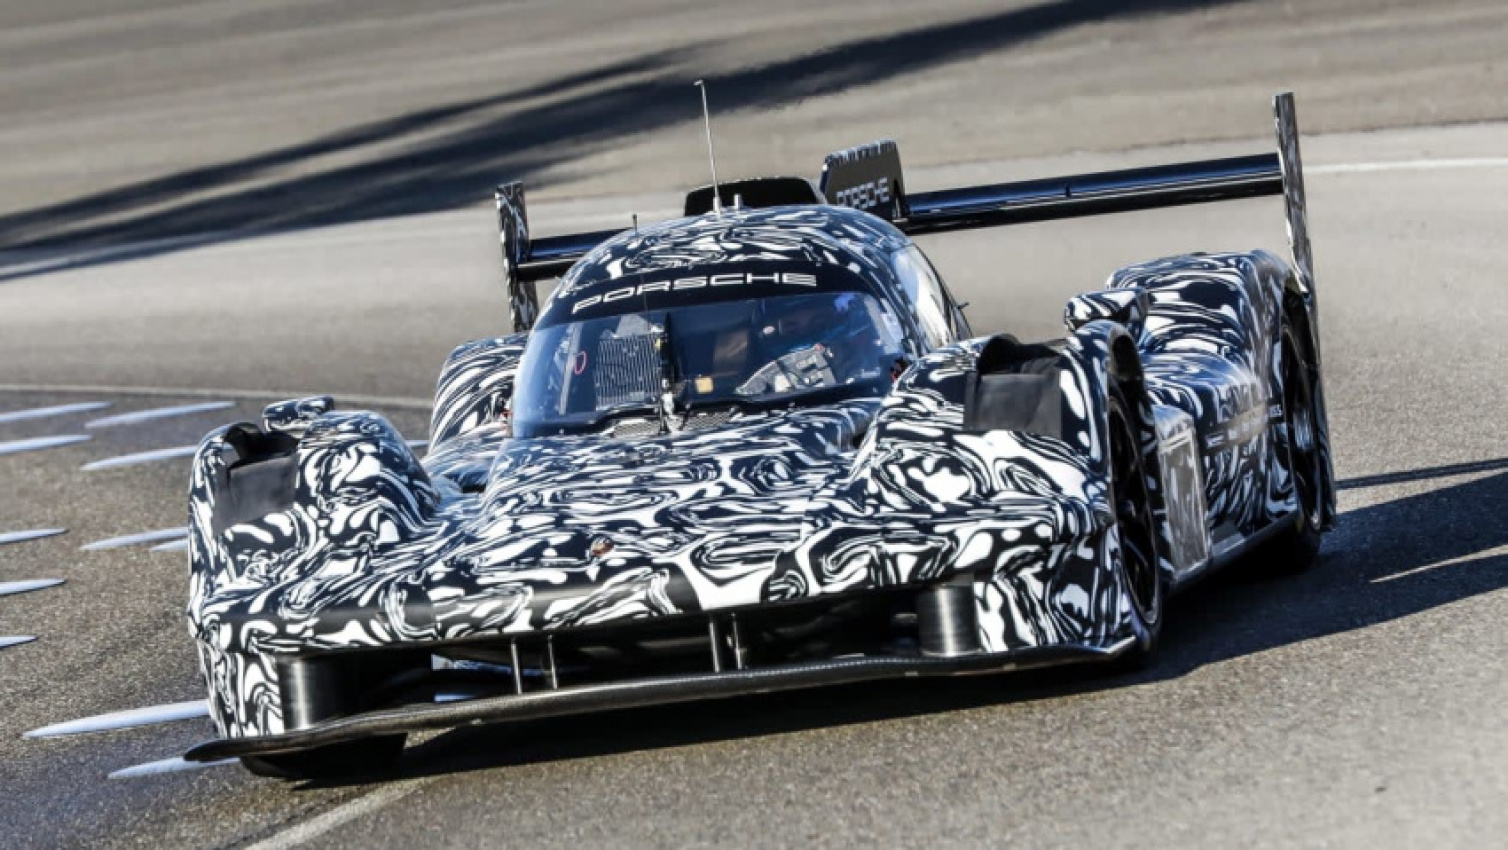 acer, autos, cars, porsche, porsche's new lmdh racer to use twin-turbo hybrid v8